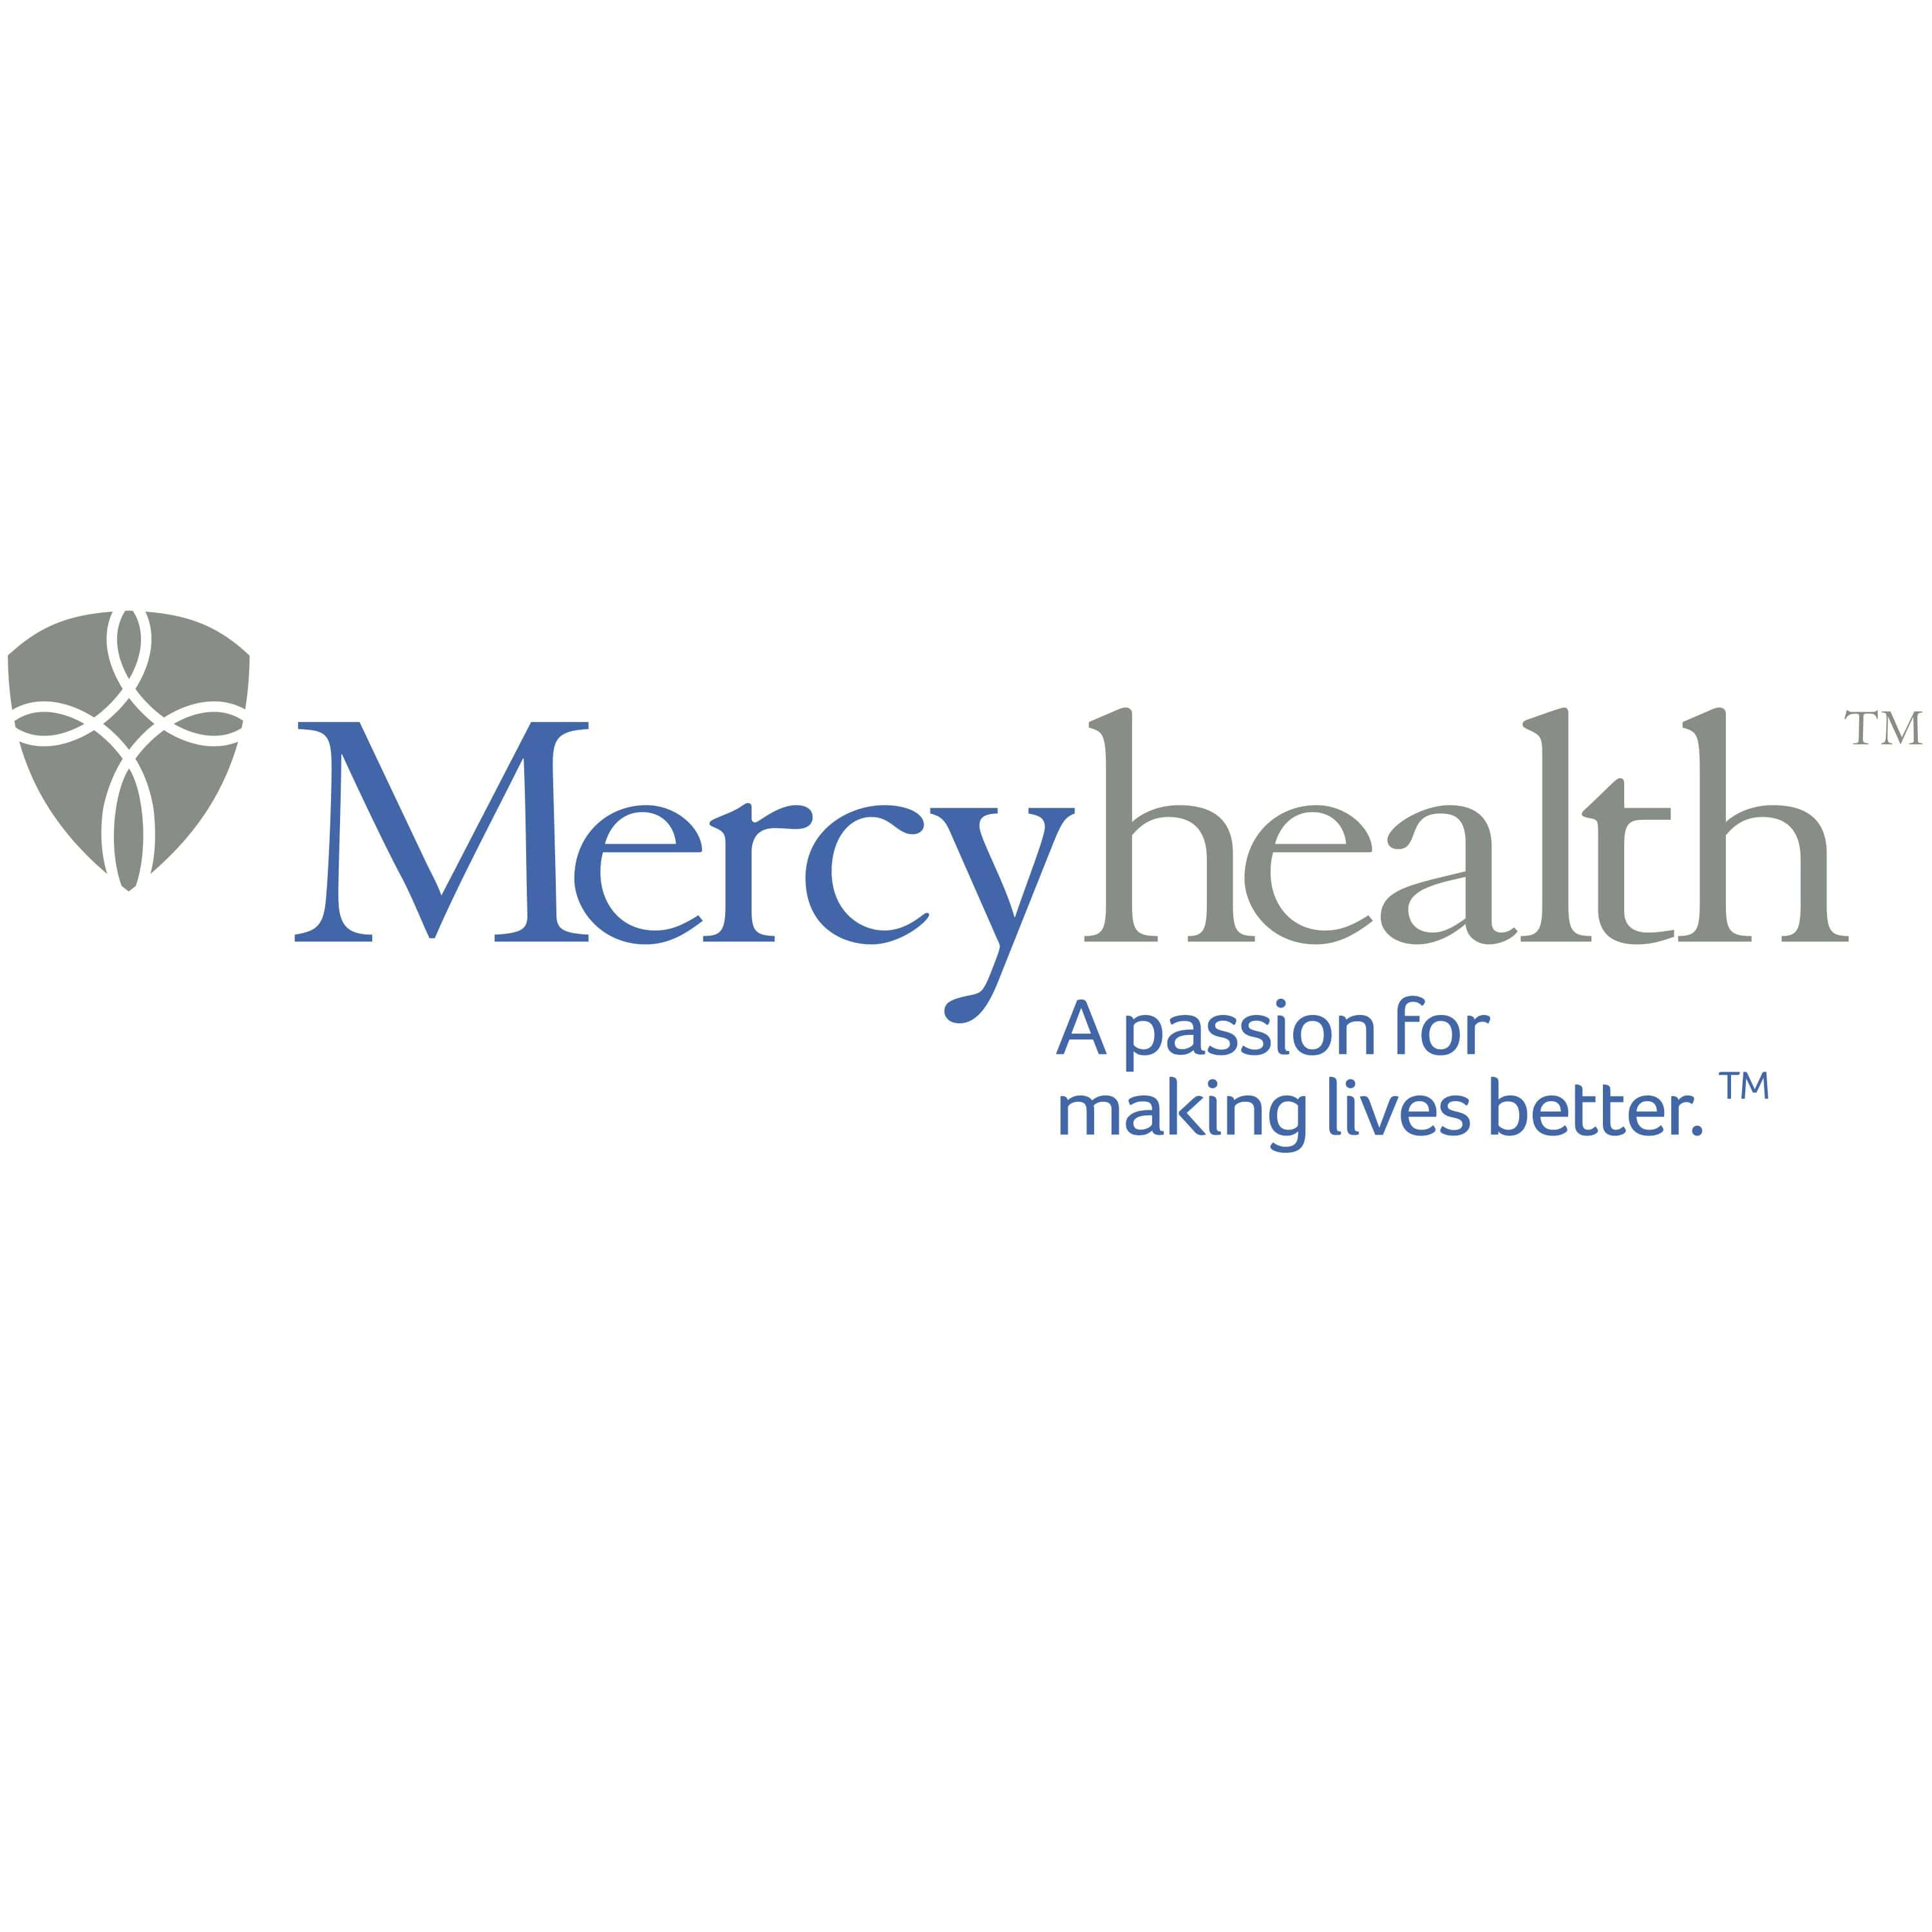 mercyhealth-logo-april-2017-5